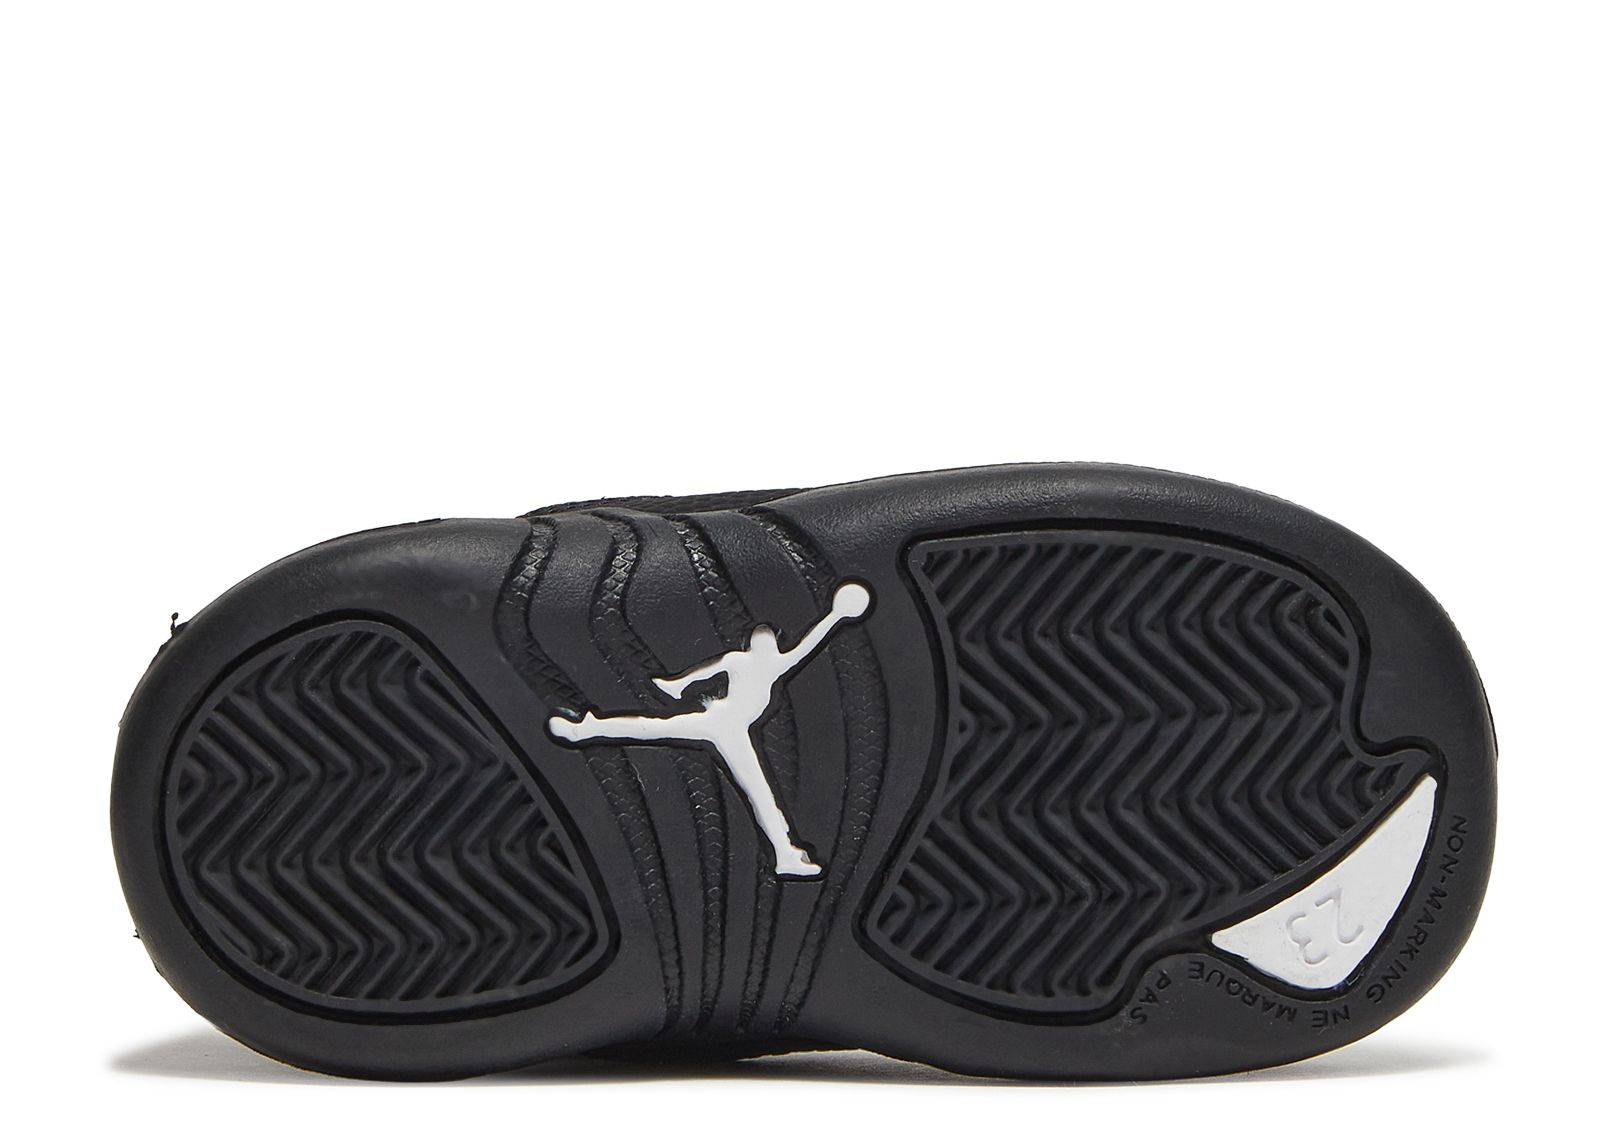 Custom Air Jordan 12 📸 By @brittishkustoms - #KeepYourSoleClean #jordan12  #customs #customjo…